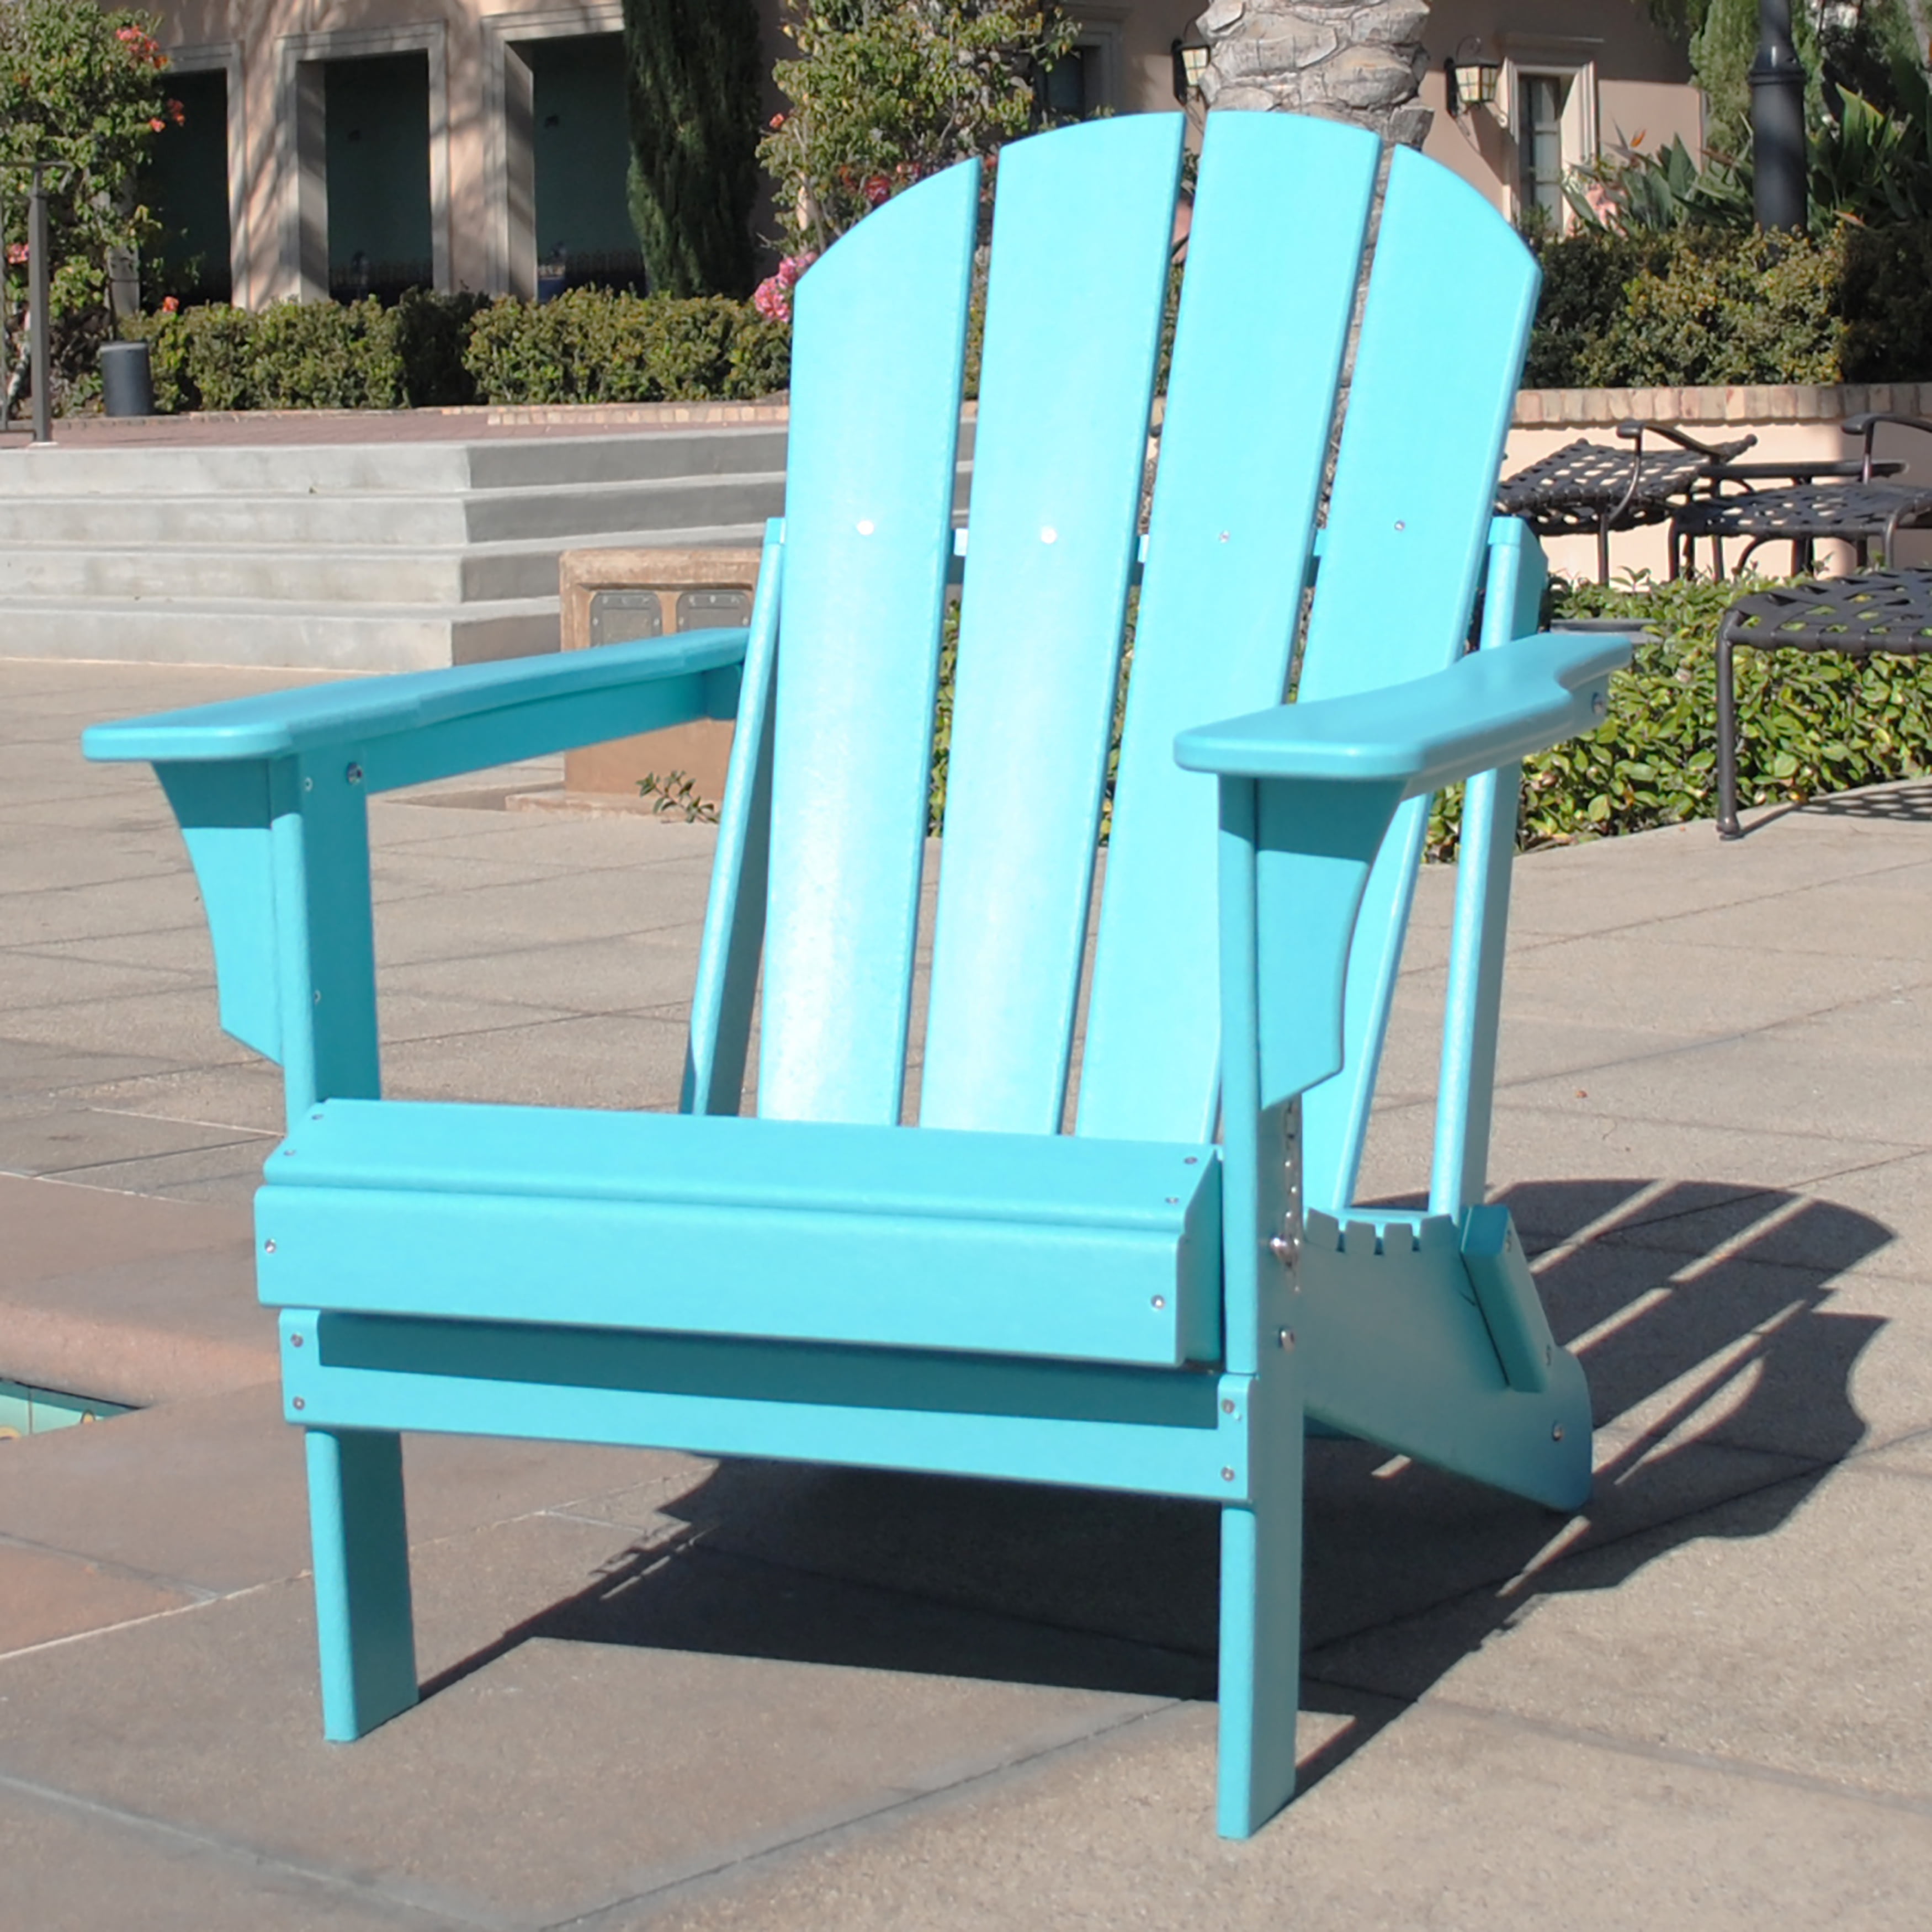 Braxton Folding Plastic Adirondack Chair, Turquoise - Walmart.com